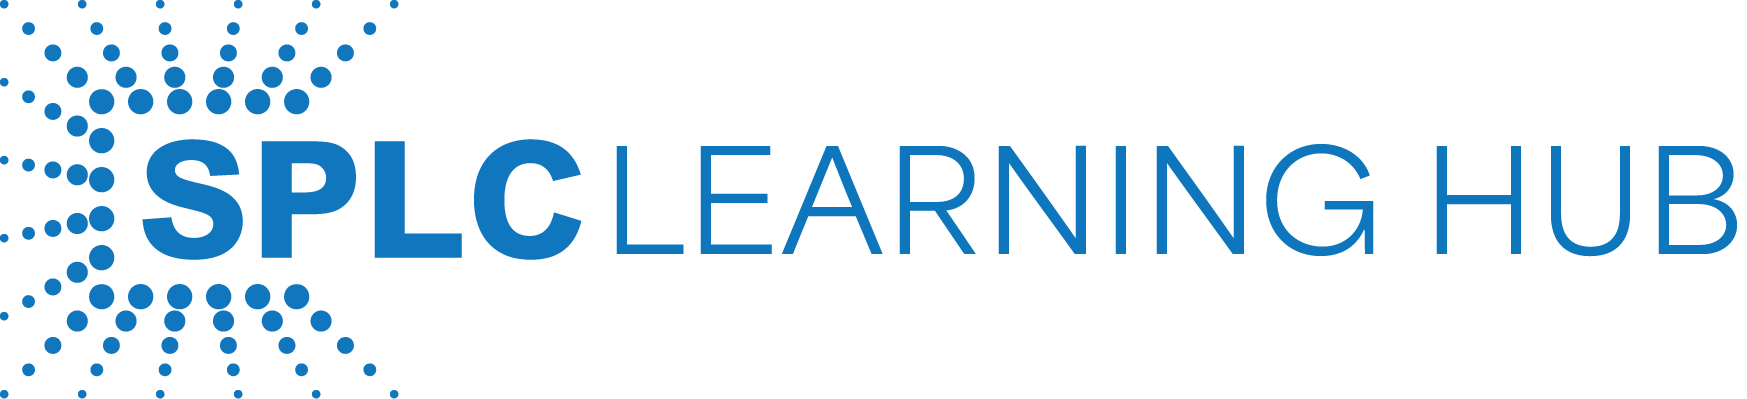 SPLC Learning Hub logo